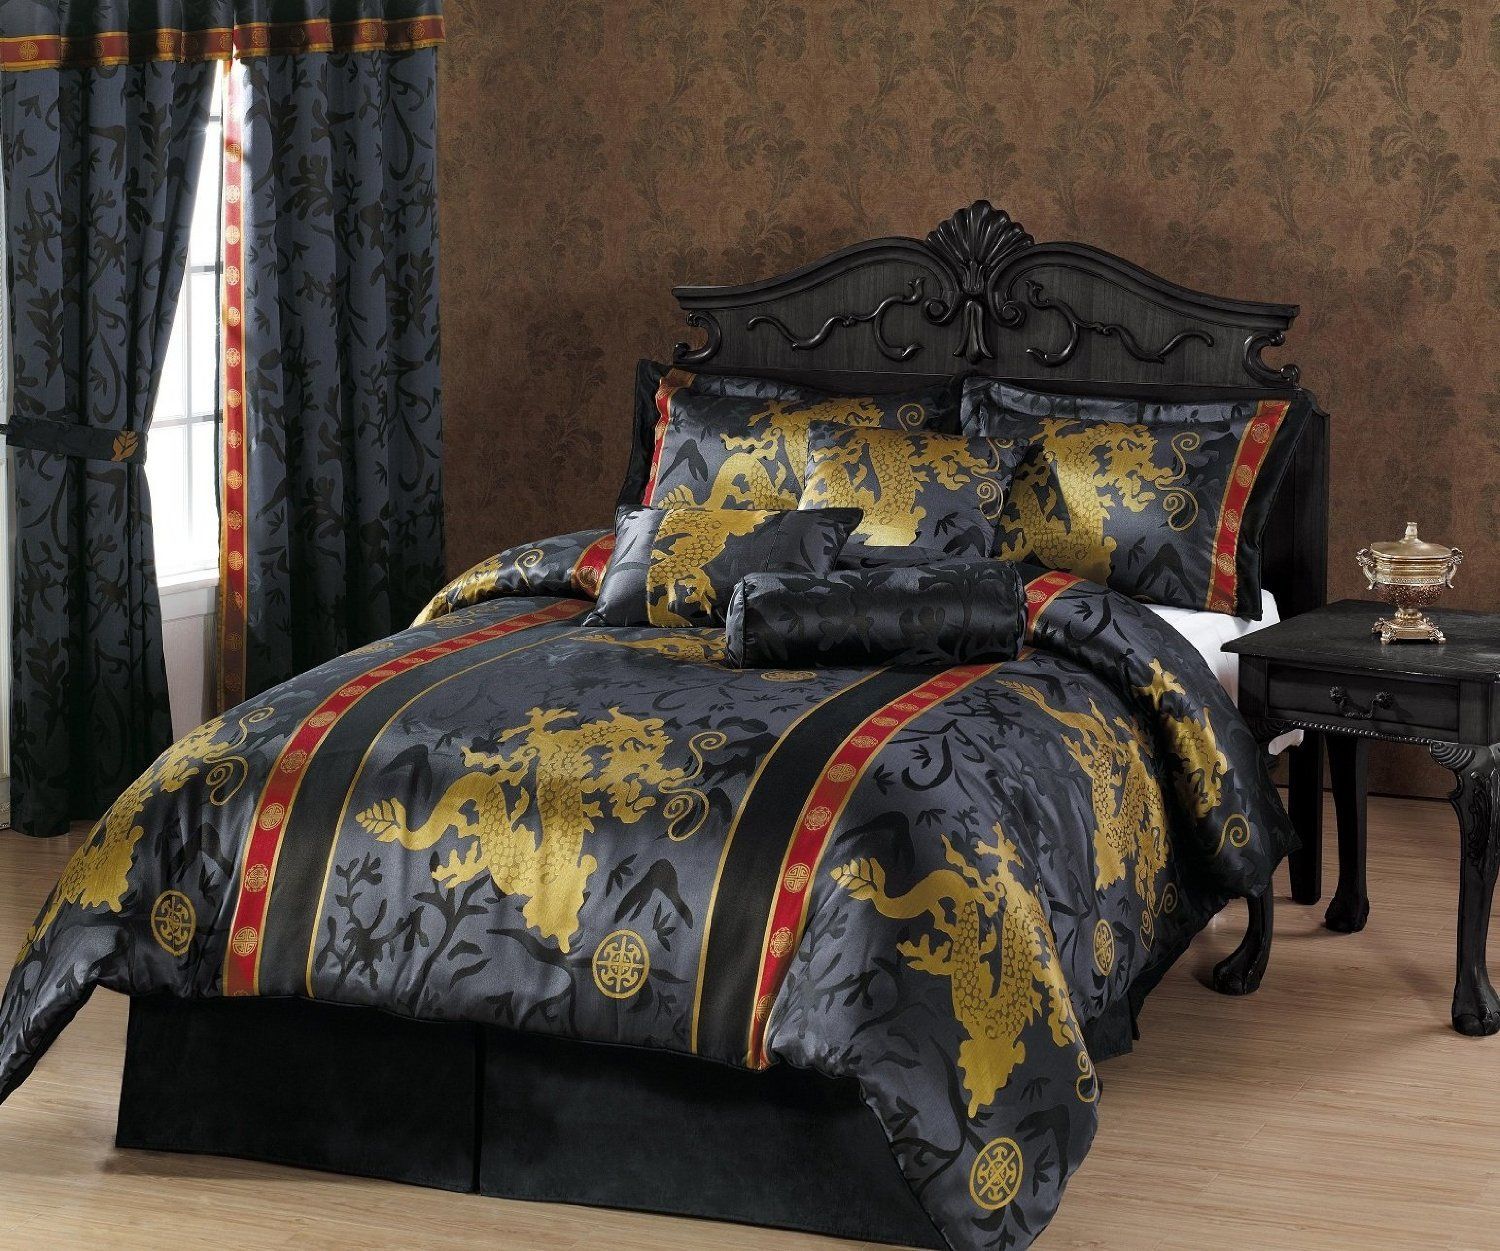 Tin M. reccomend Asian print bed linens